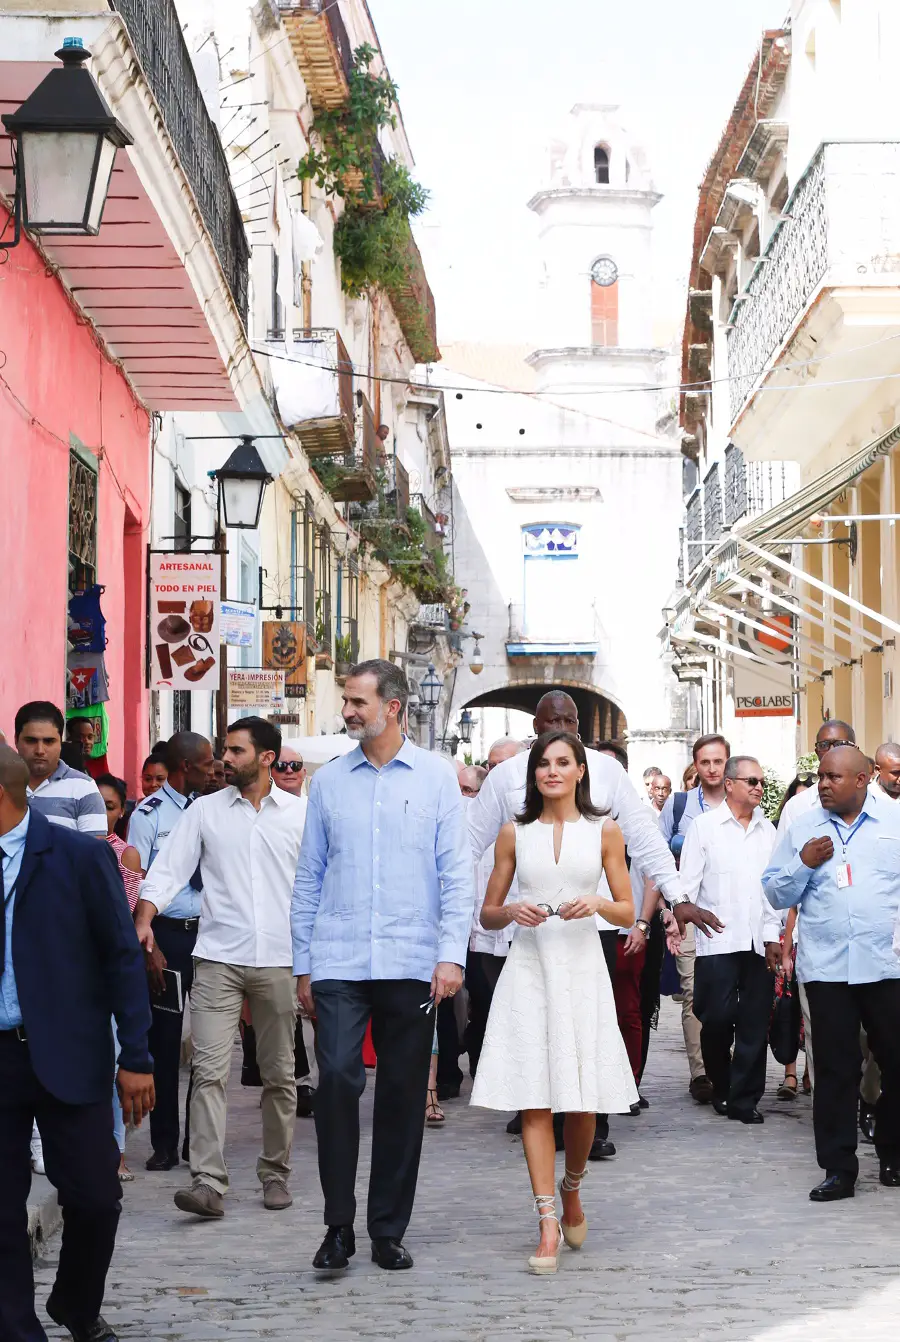 Queen Letizia and King Felipe had a fun day in Havana City during Cuba visit